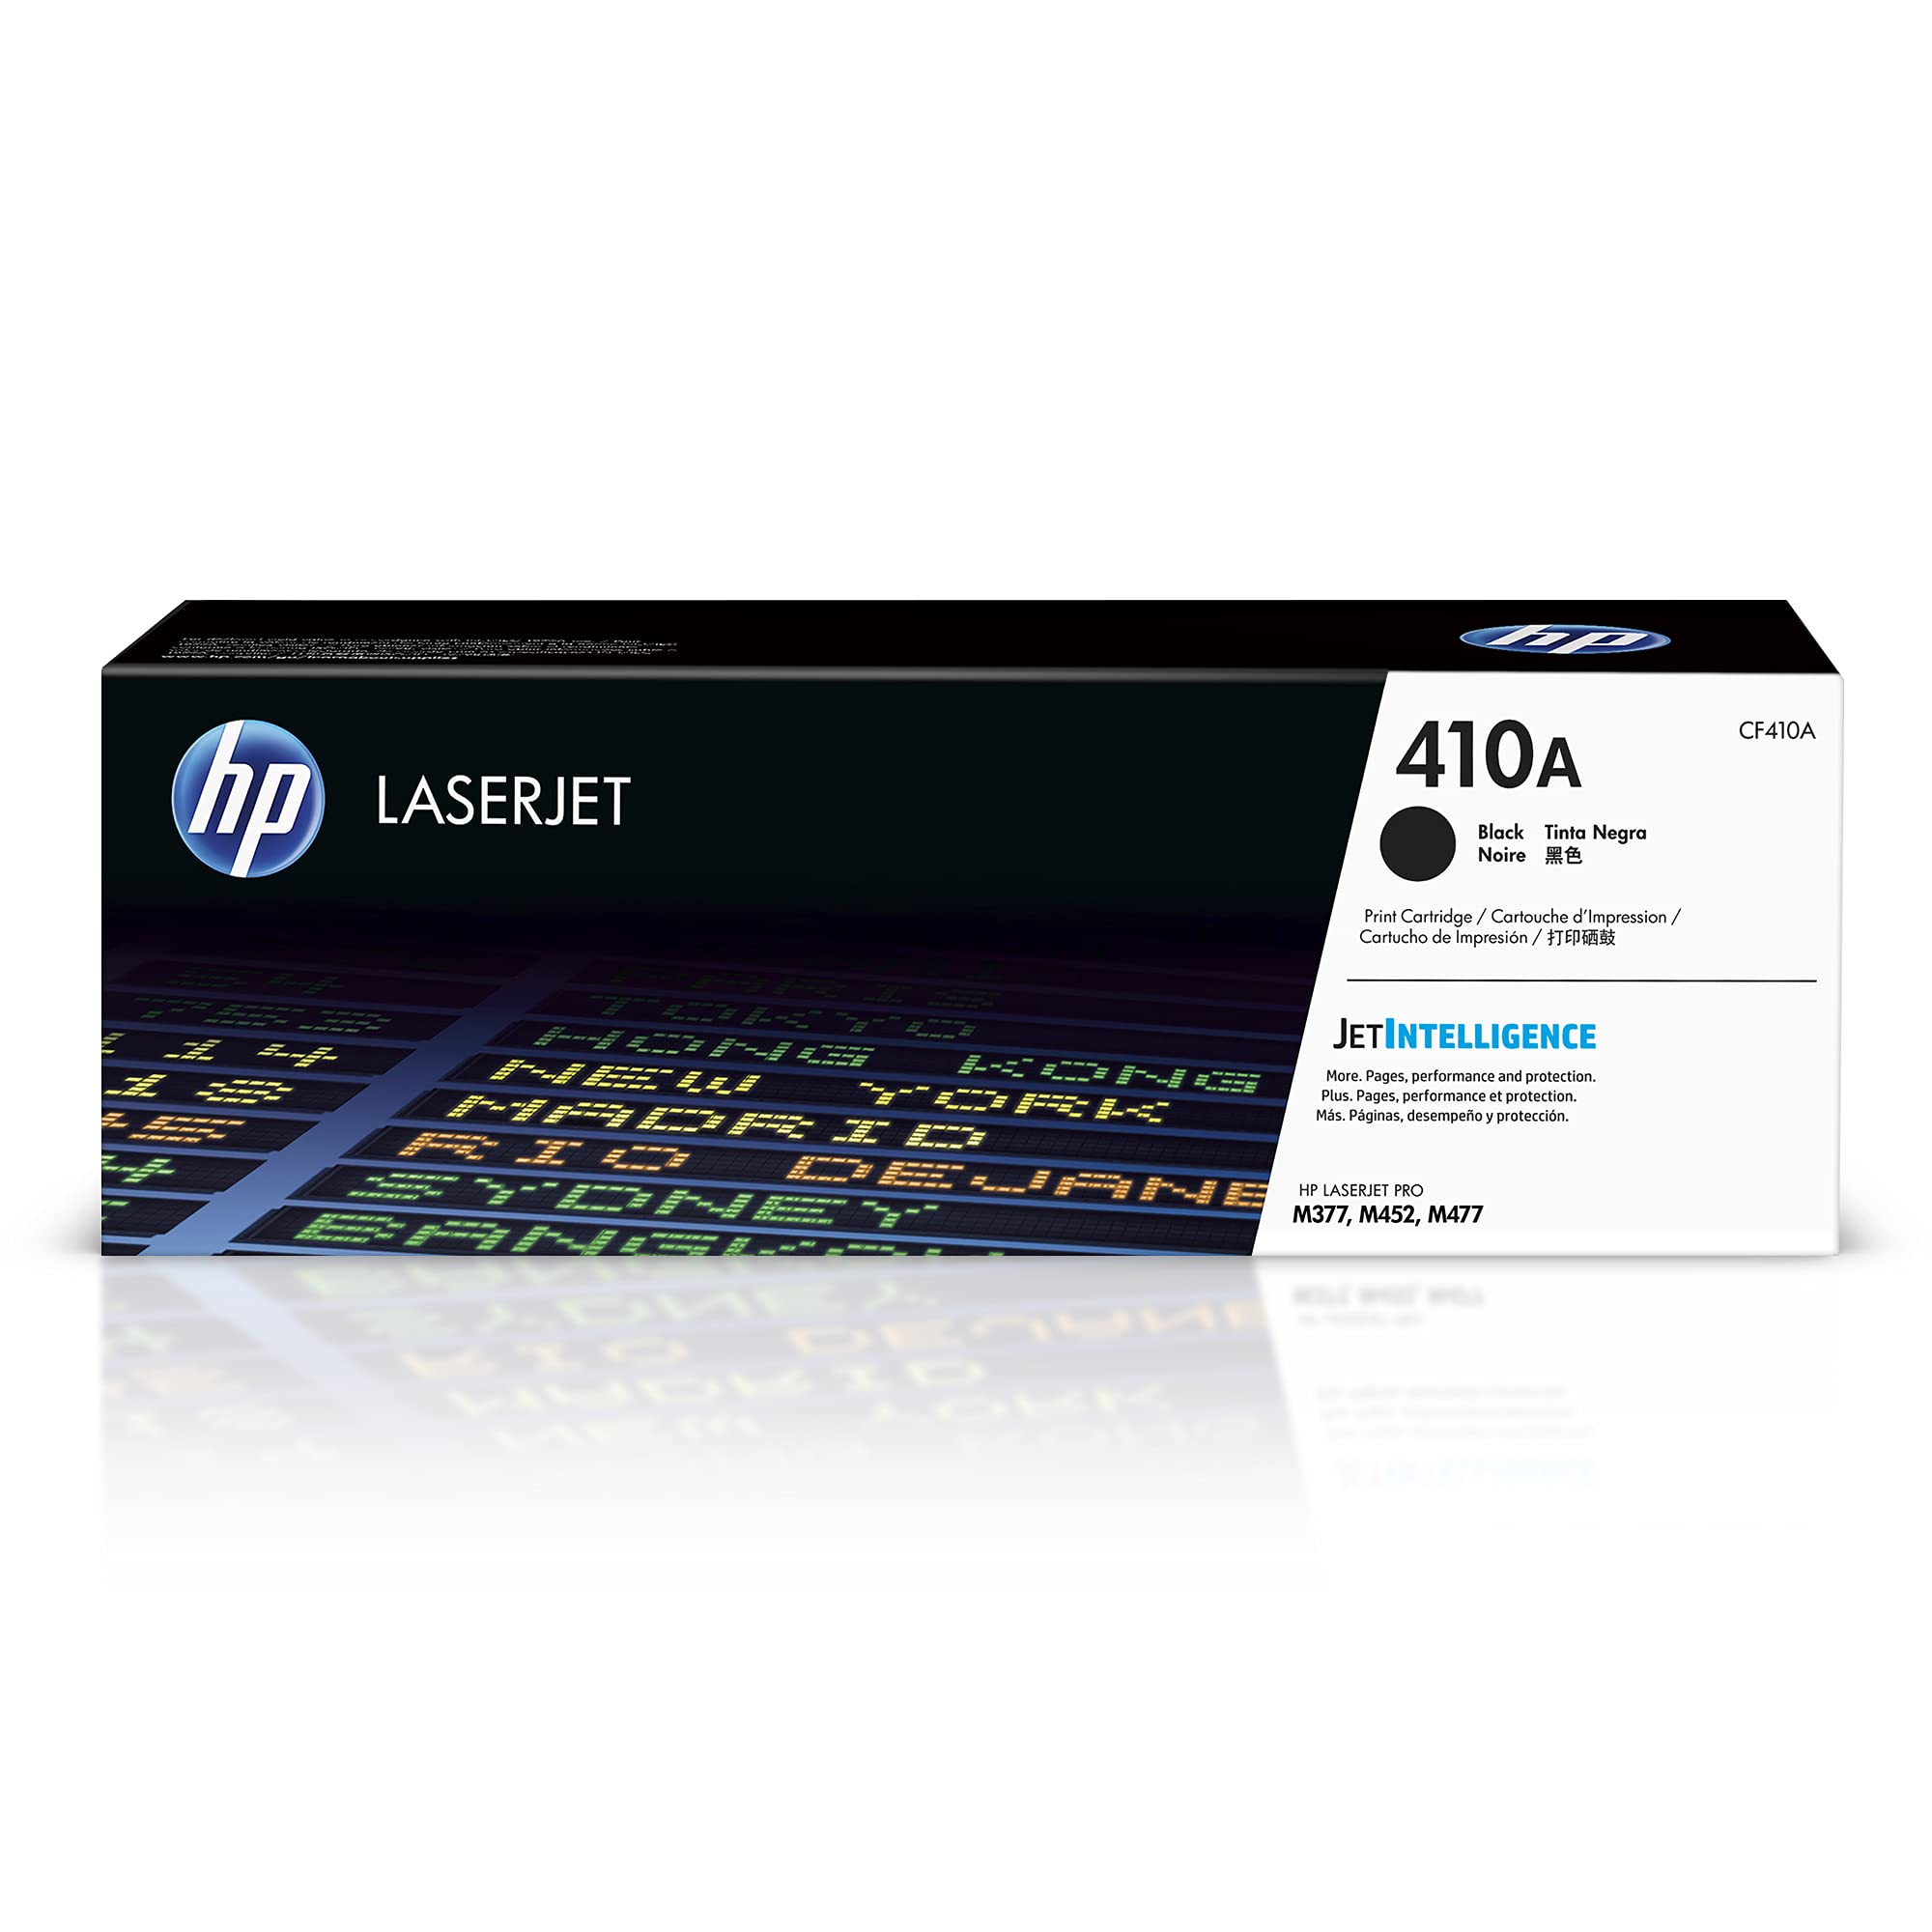 HP 410A ブラック トナー カートリッジ | Color LaserJet Pro M452 シリーズ、...